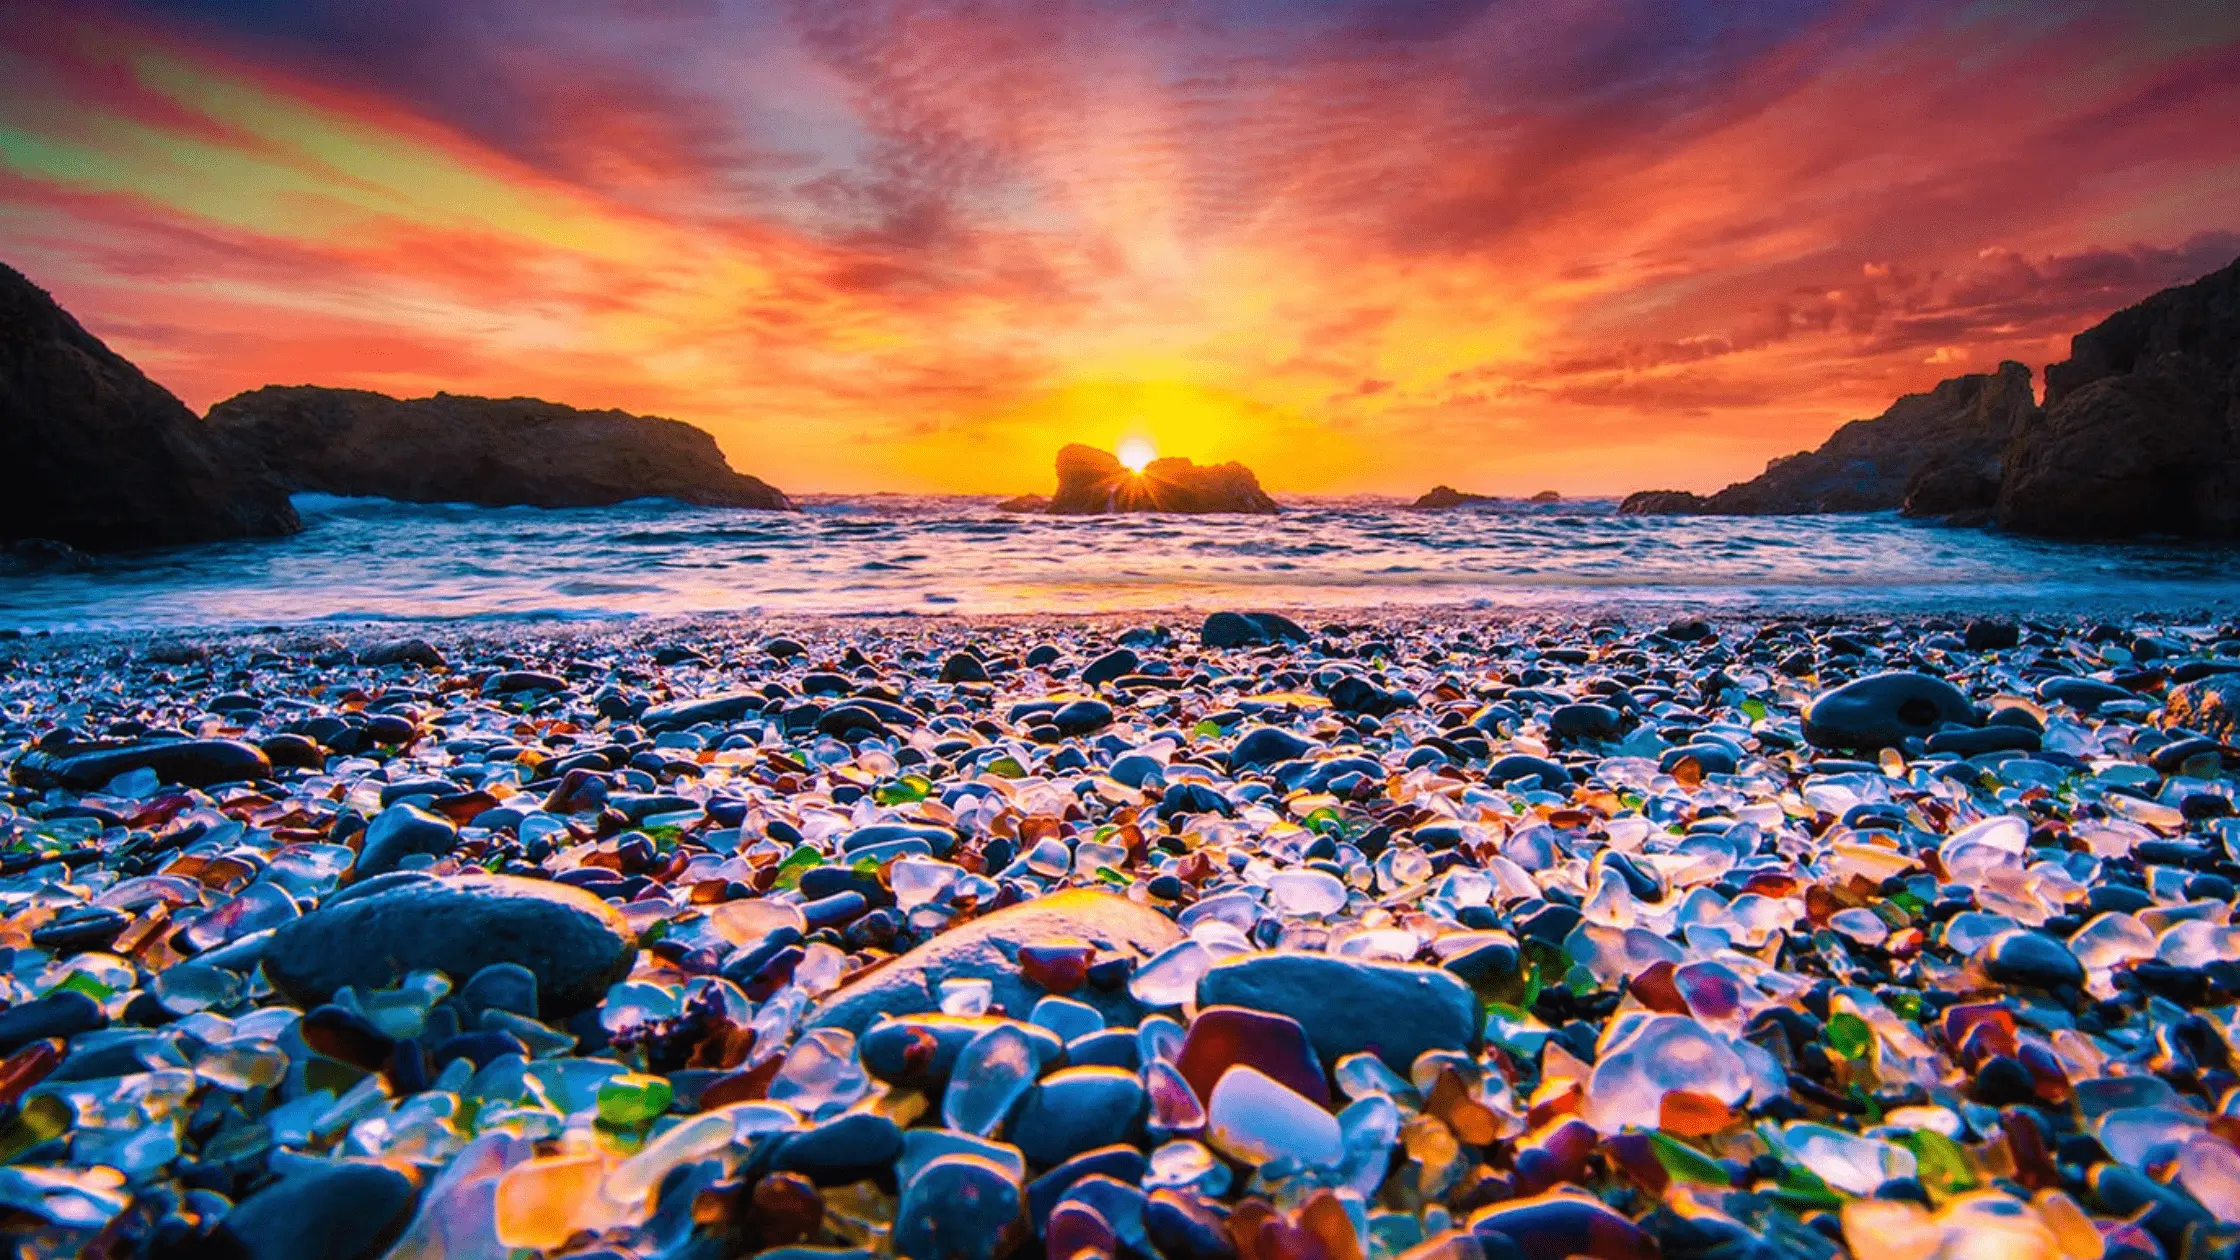 Glass Pebble Beach Wonders: Shores of Transformed Splendor